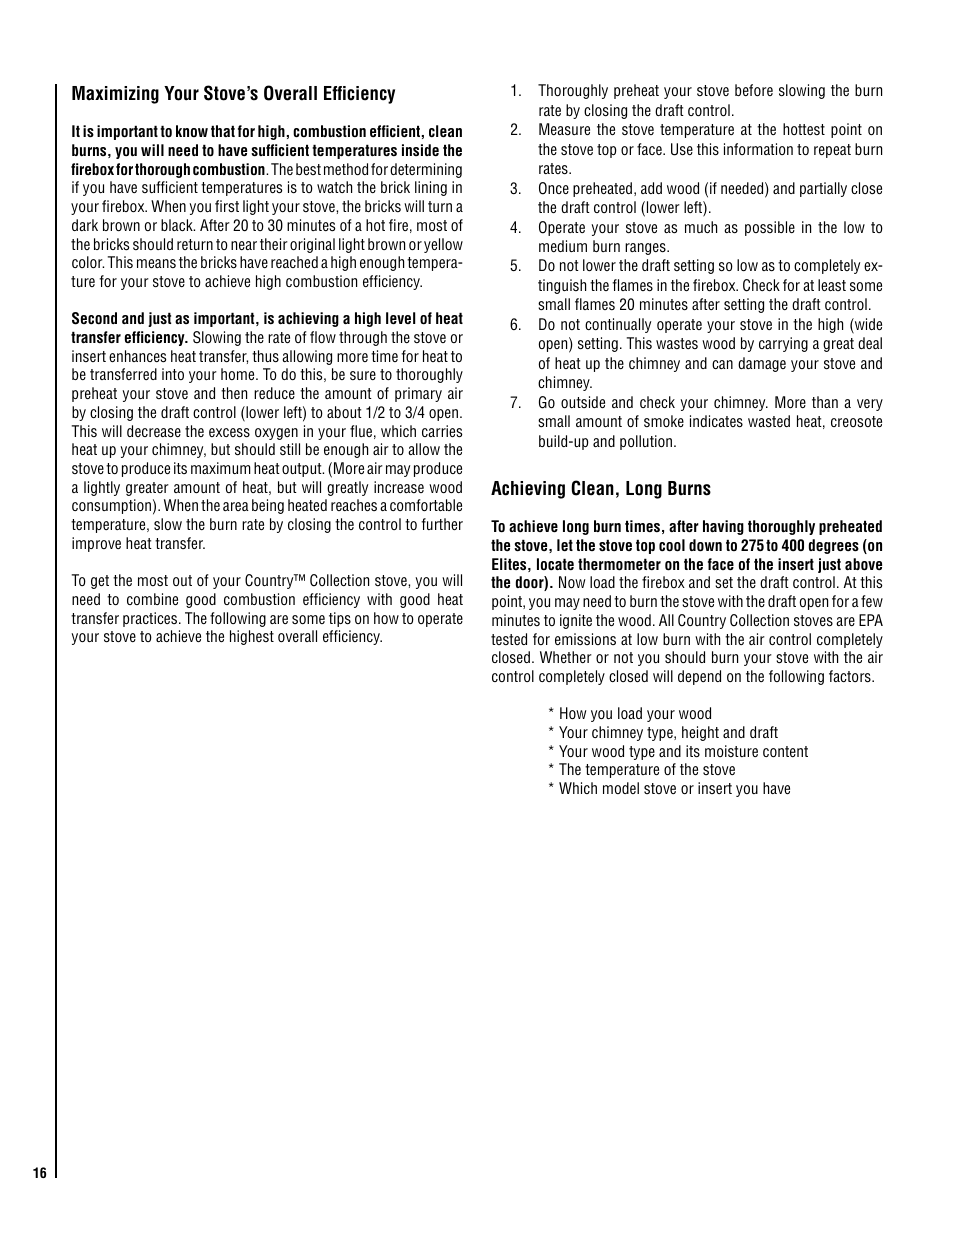 LG MODEL STRIKER S160 User Manual | Page 16 / 22